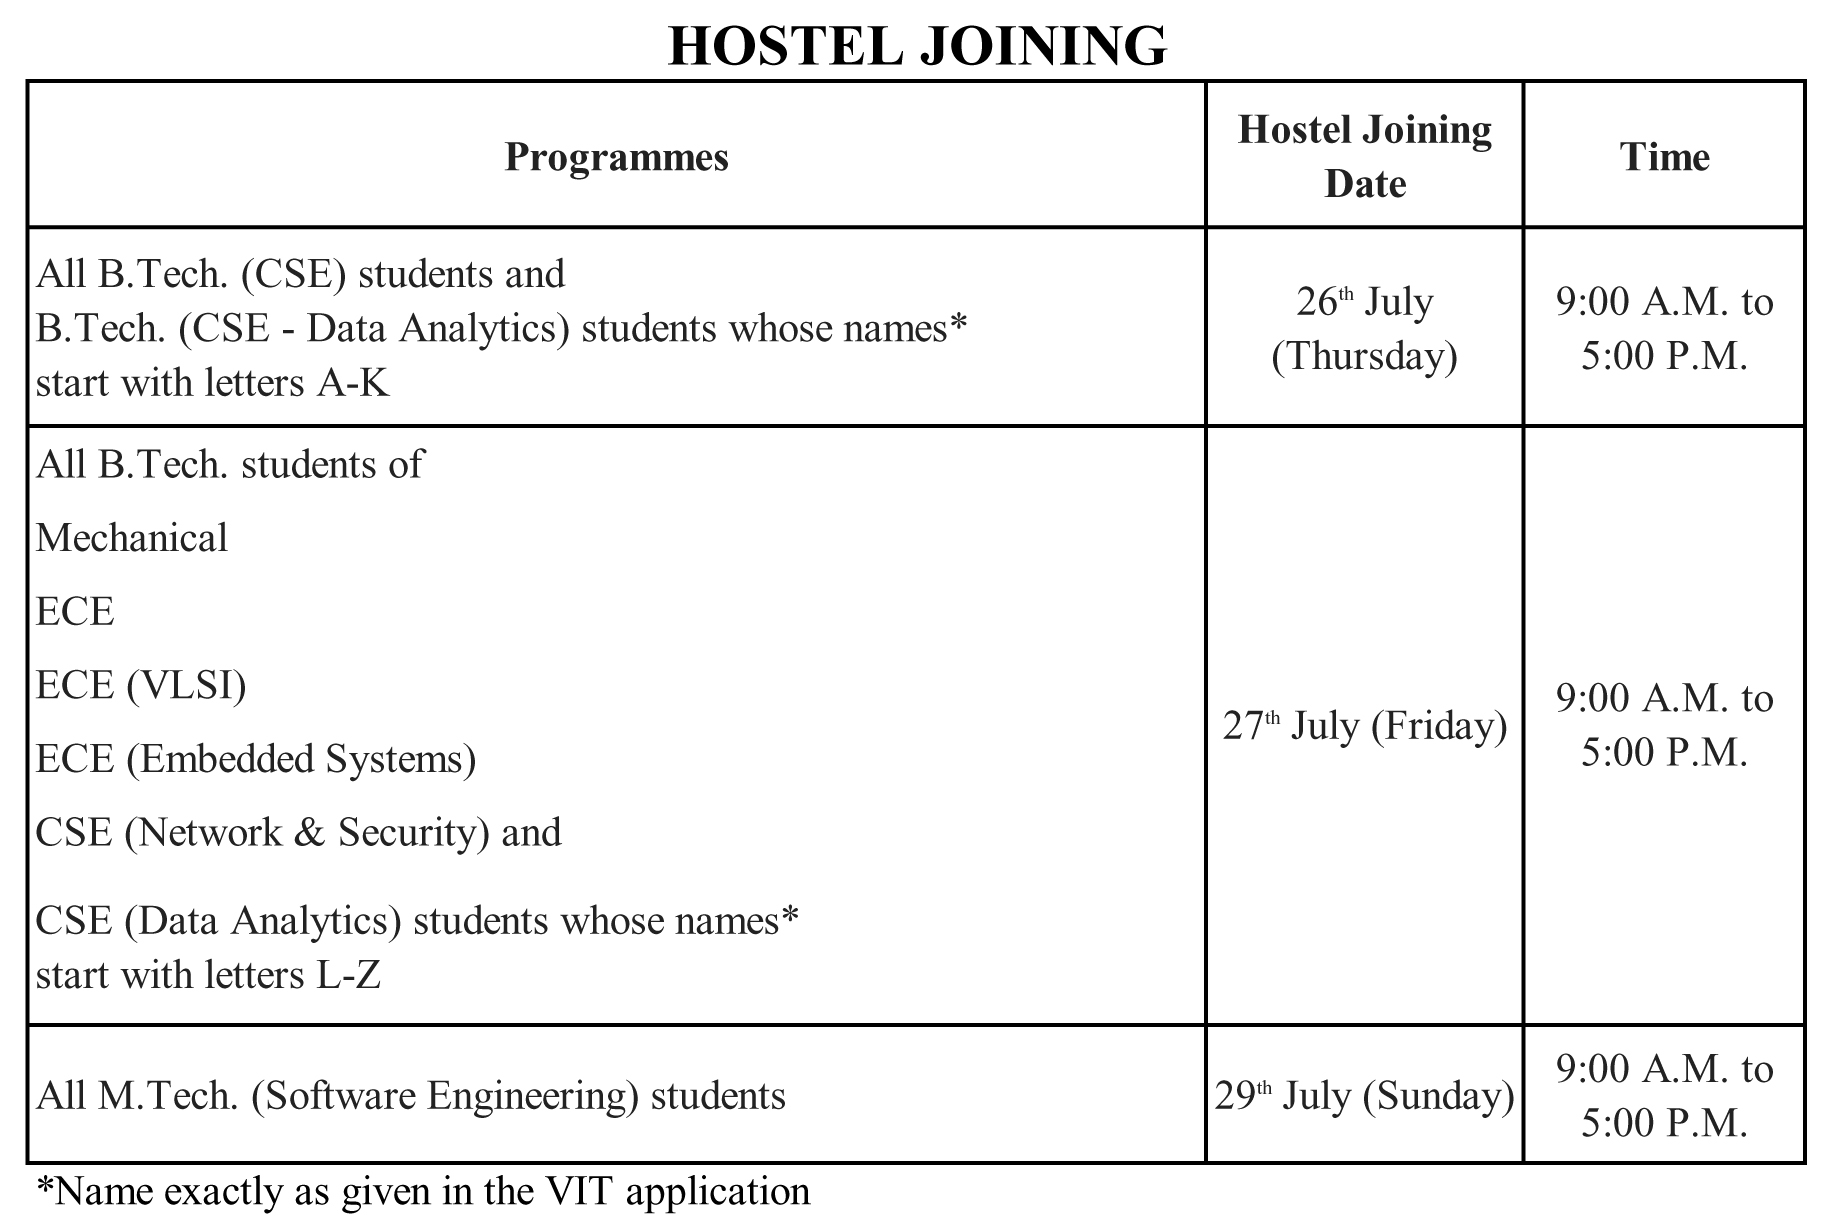 Hostel-Joining